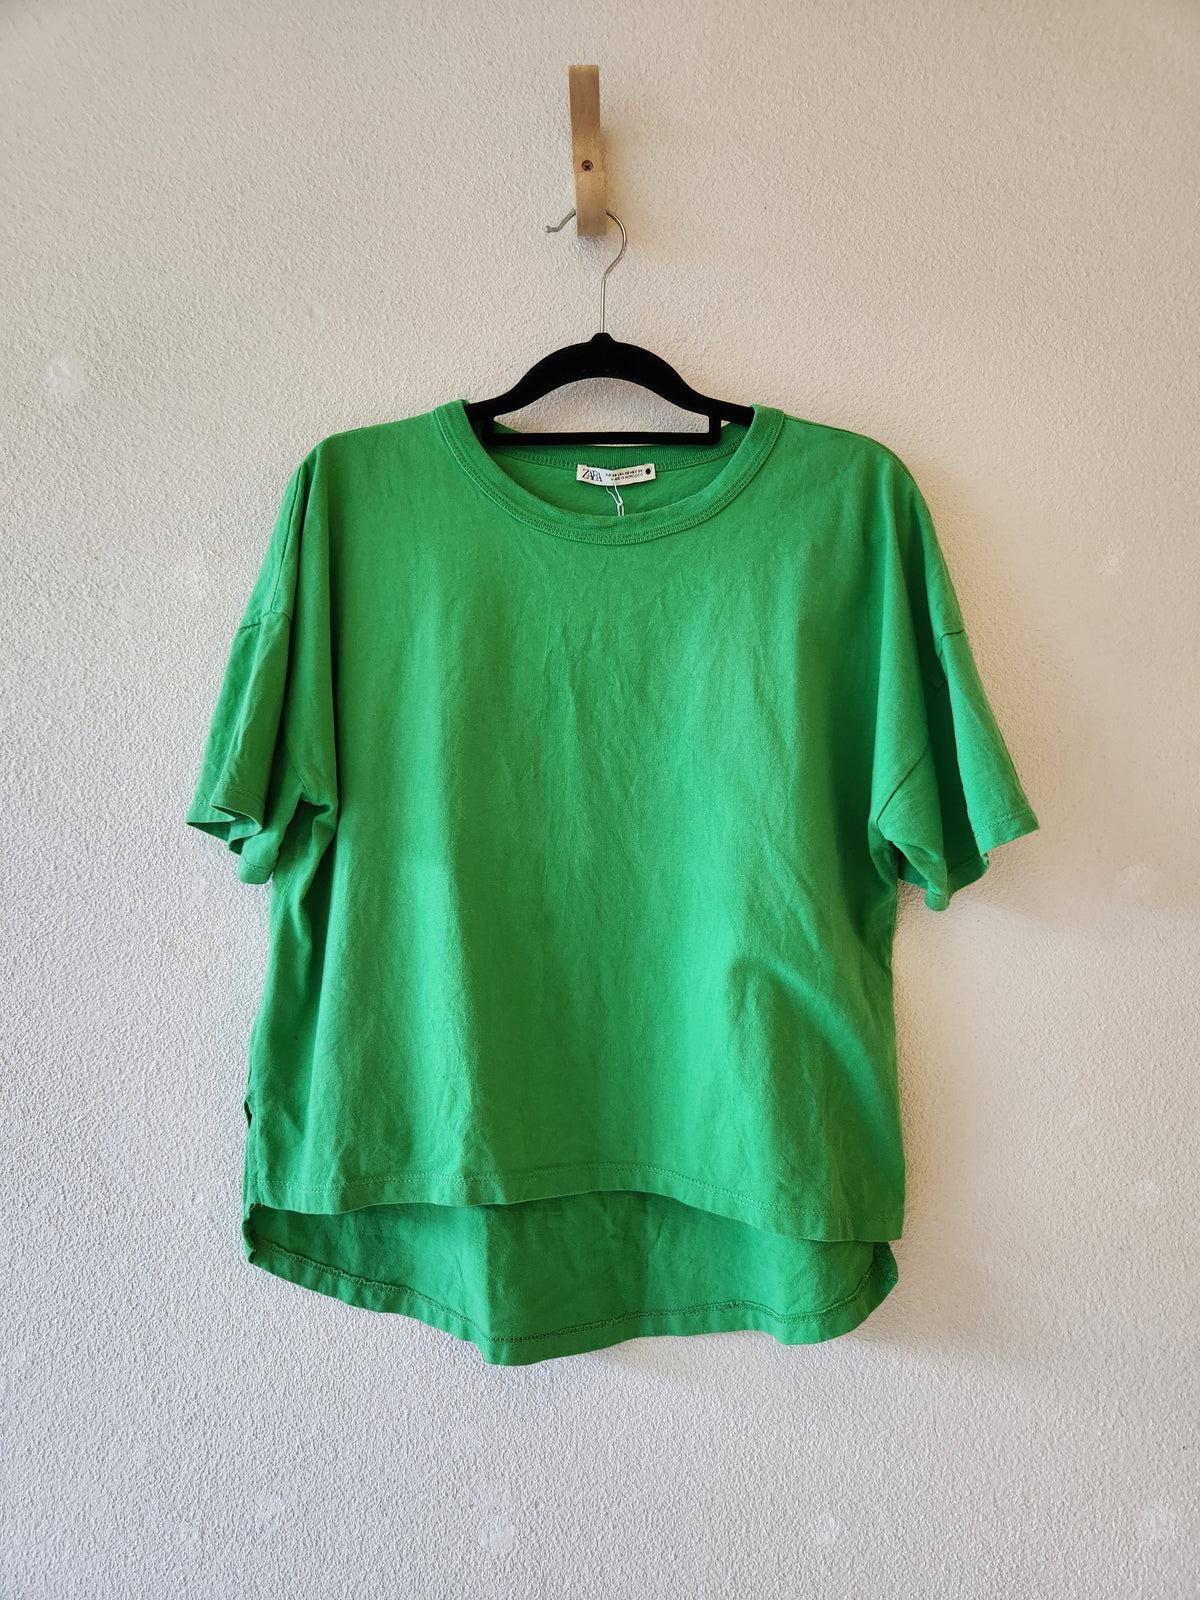 Zara Classic Apple green cotton rich t shirt Top S